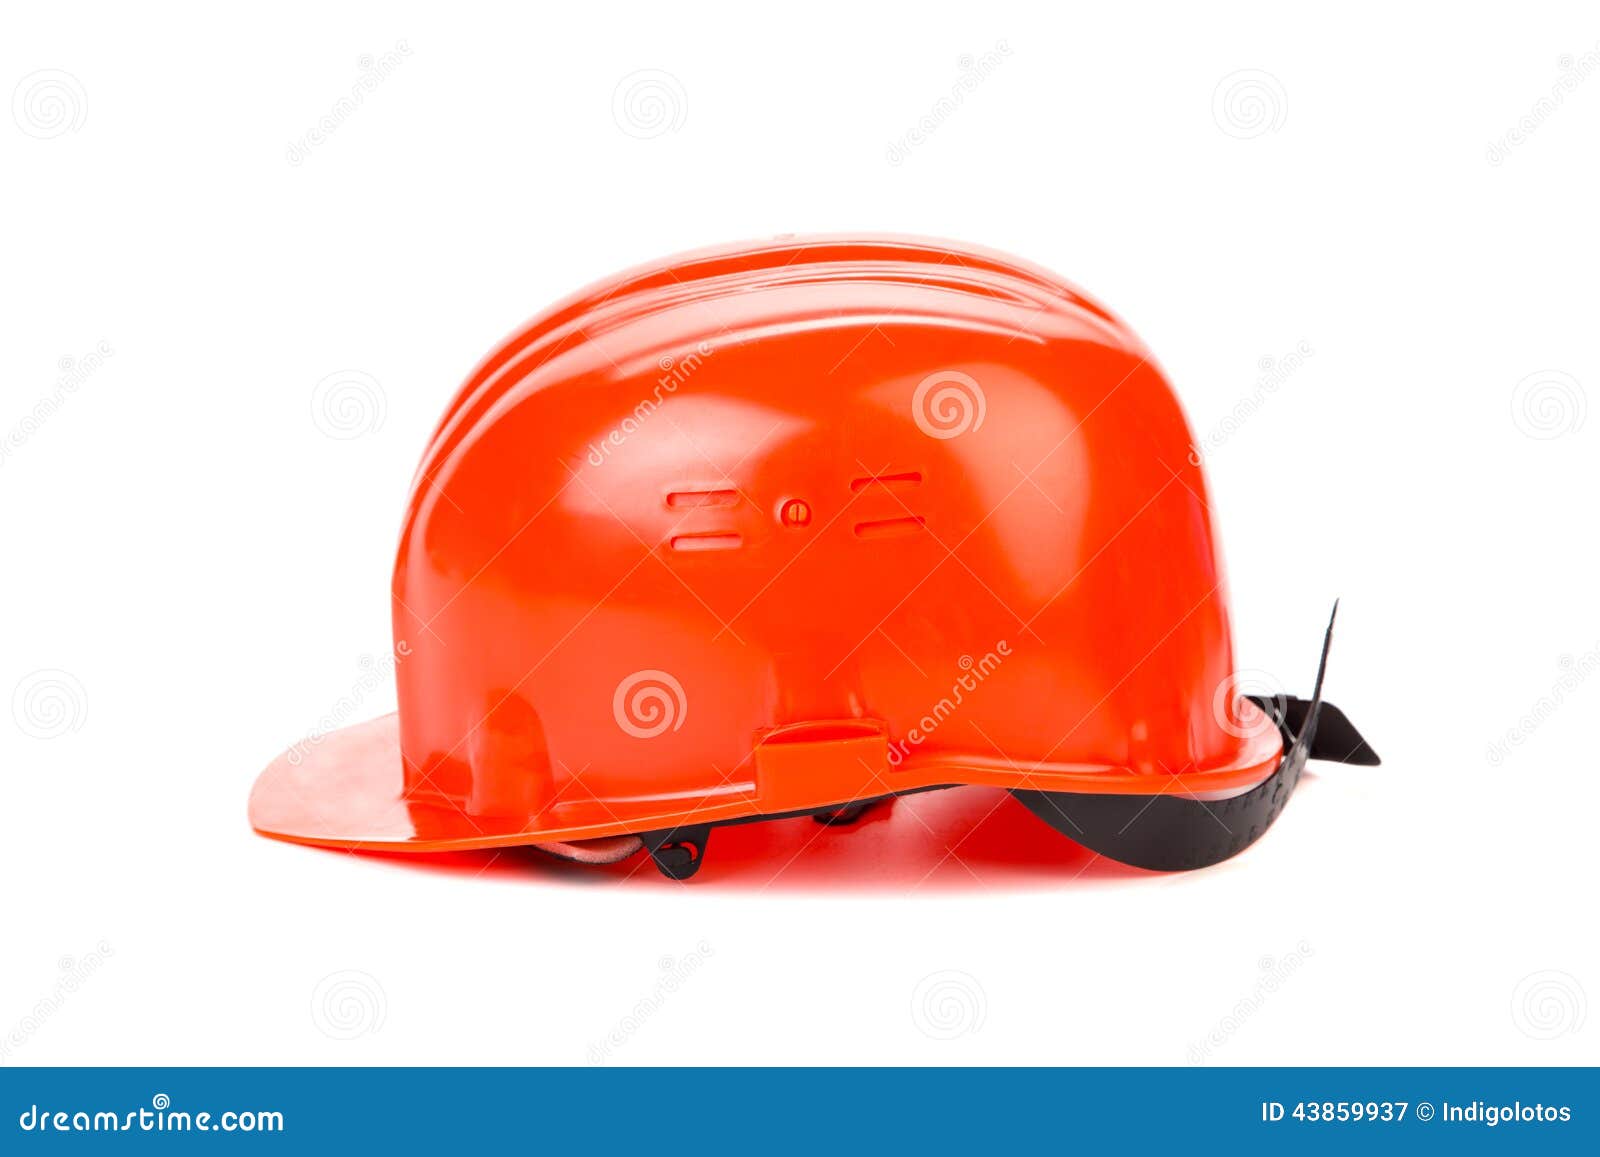 orange hard hat clipart - photo #47